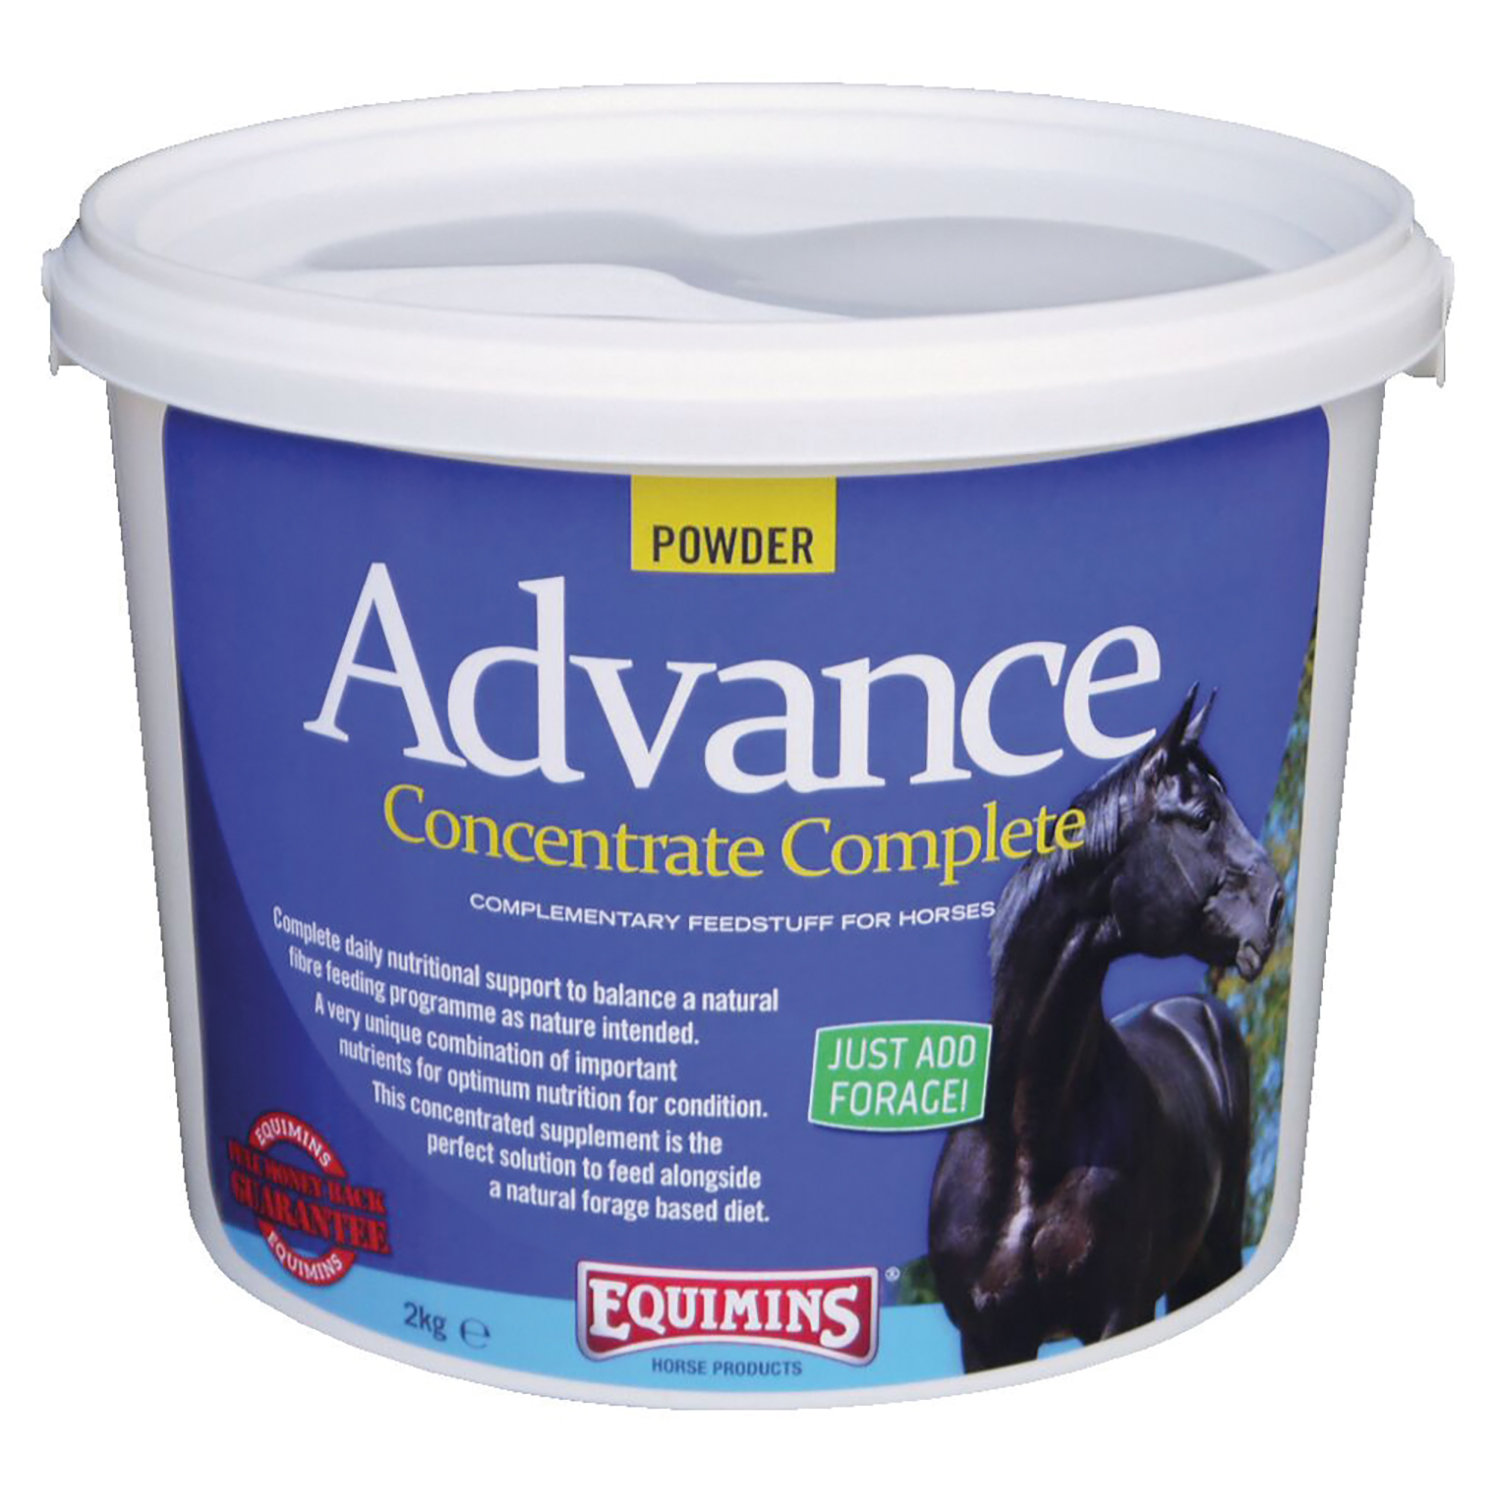 Equimins Advance Concentrate Complete Powder - 2 Kg Tub [517]